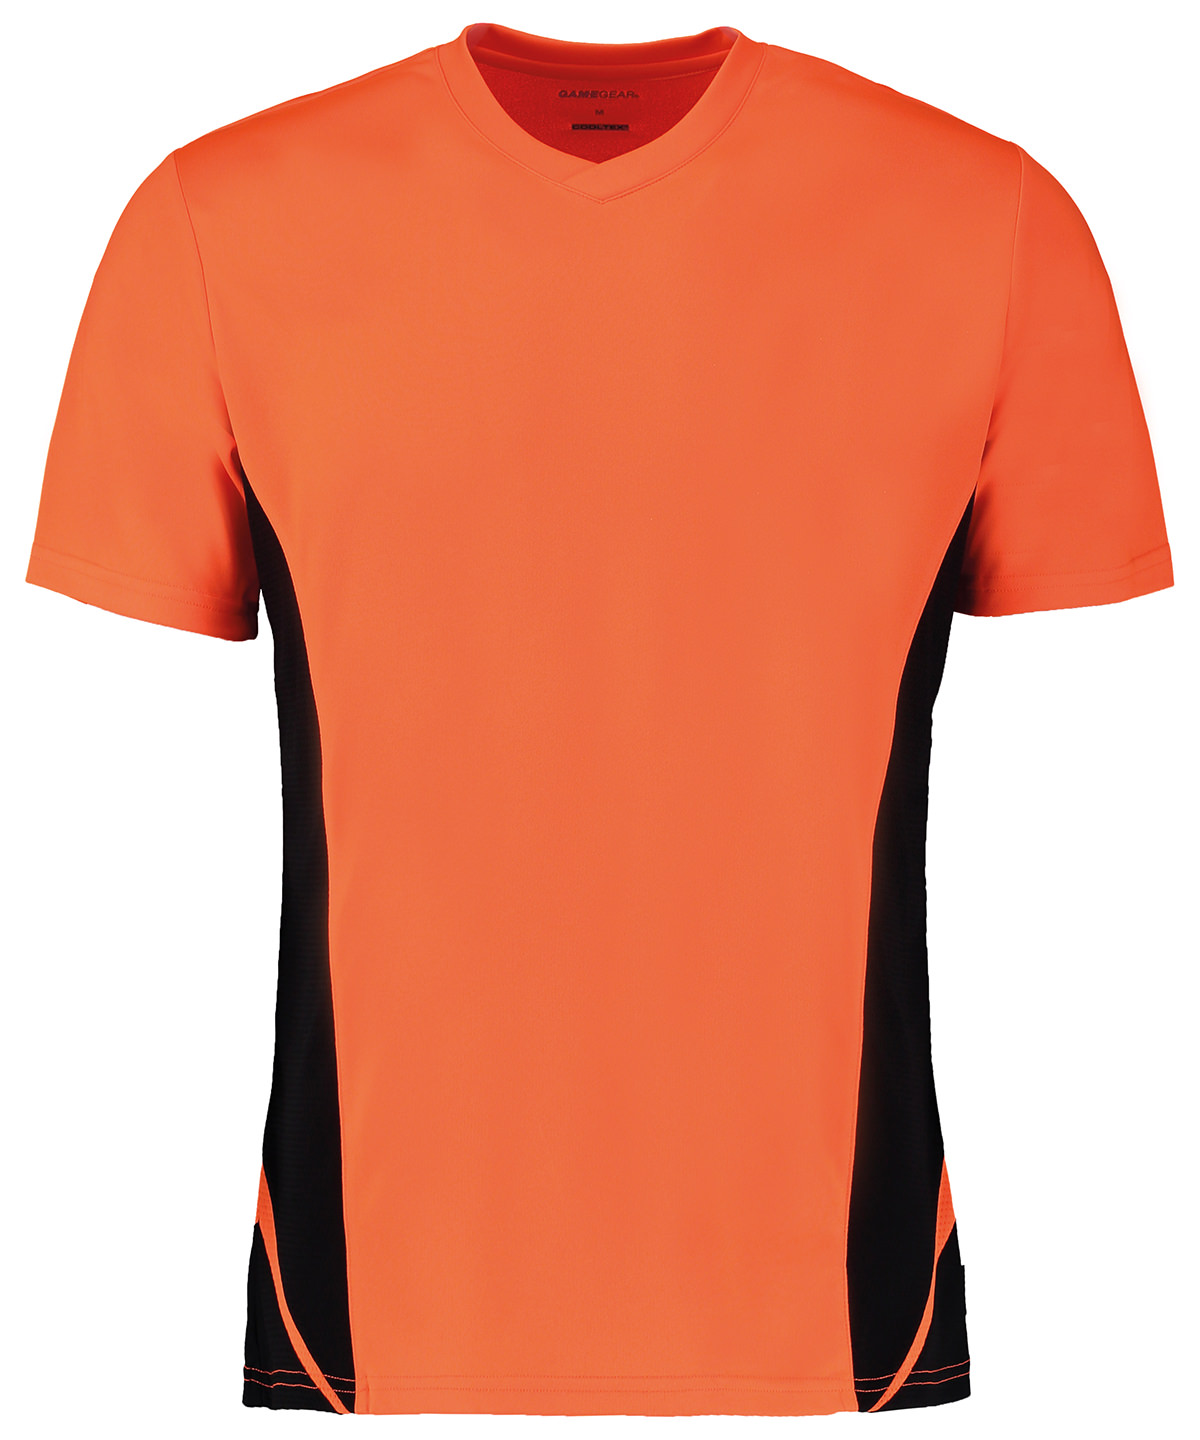 Gamegear® Cooltex® team top v-neck short sleeve (regular fit)